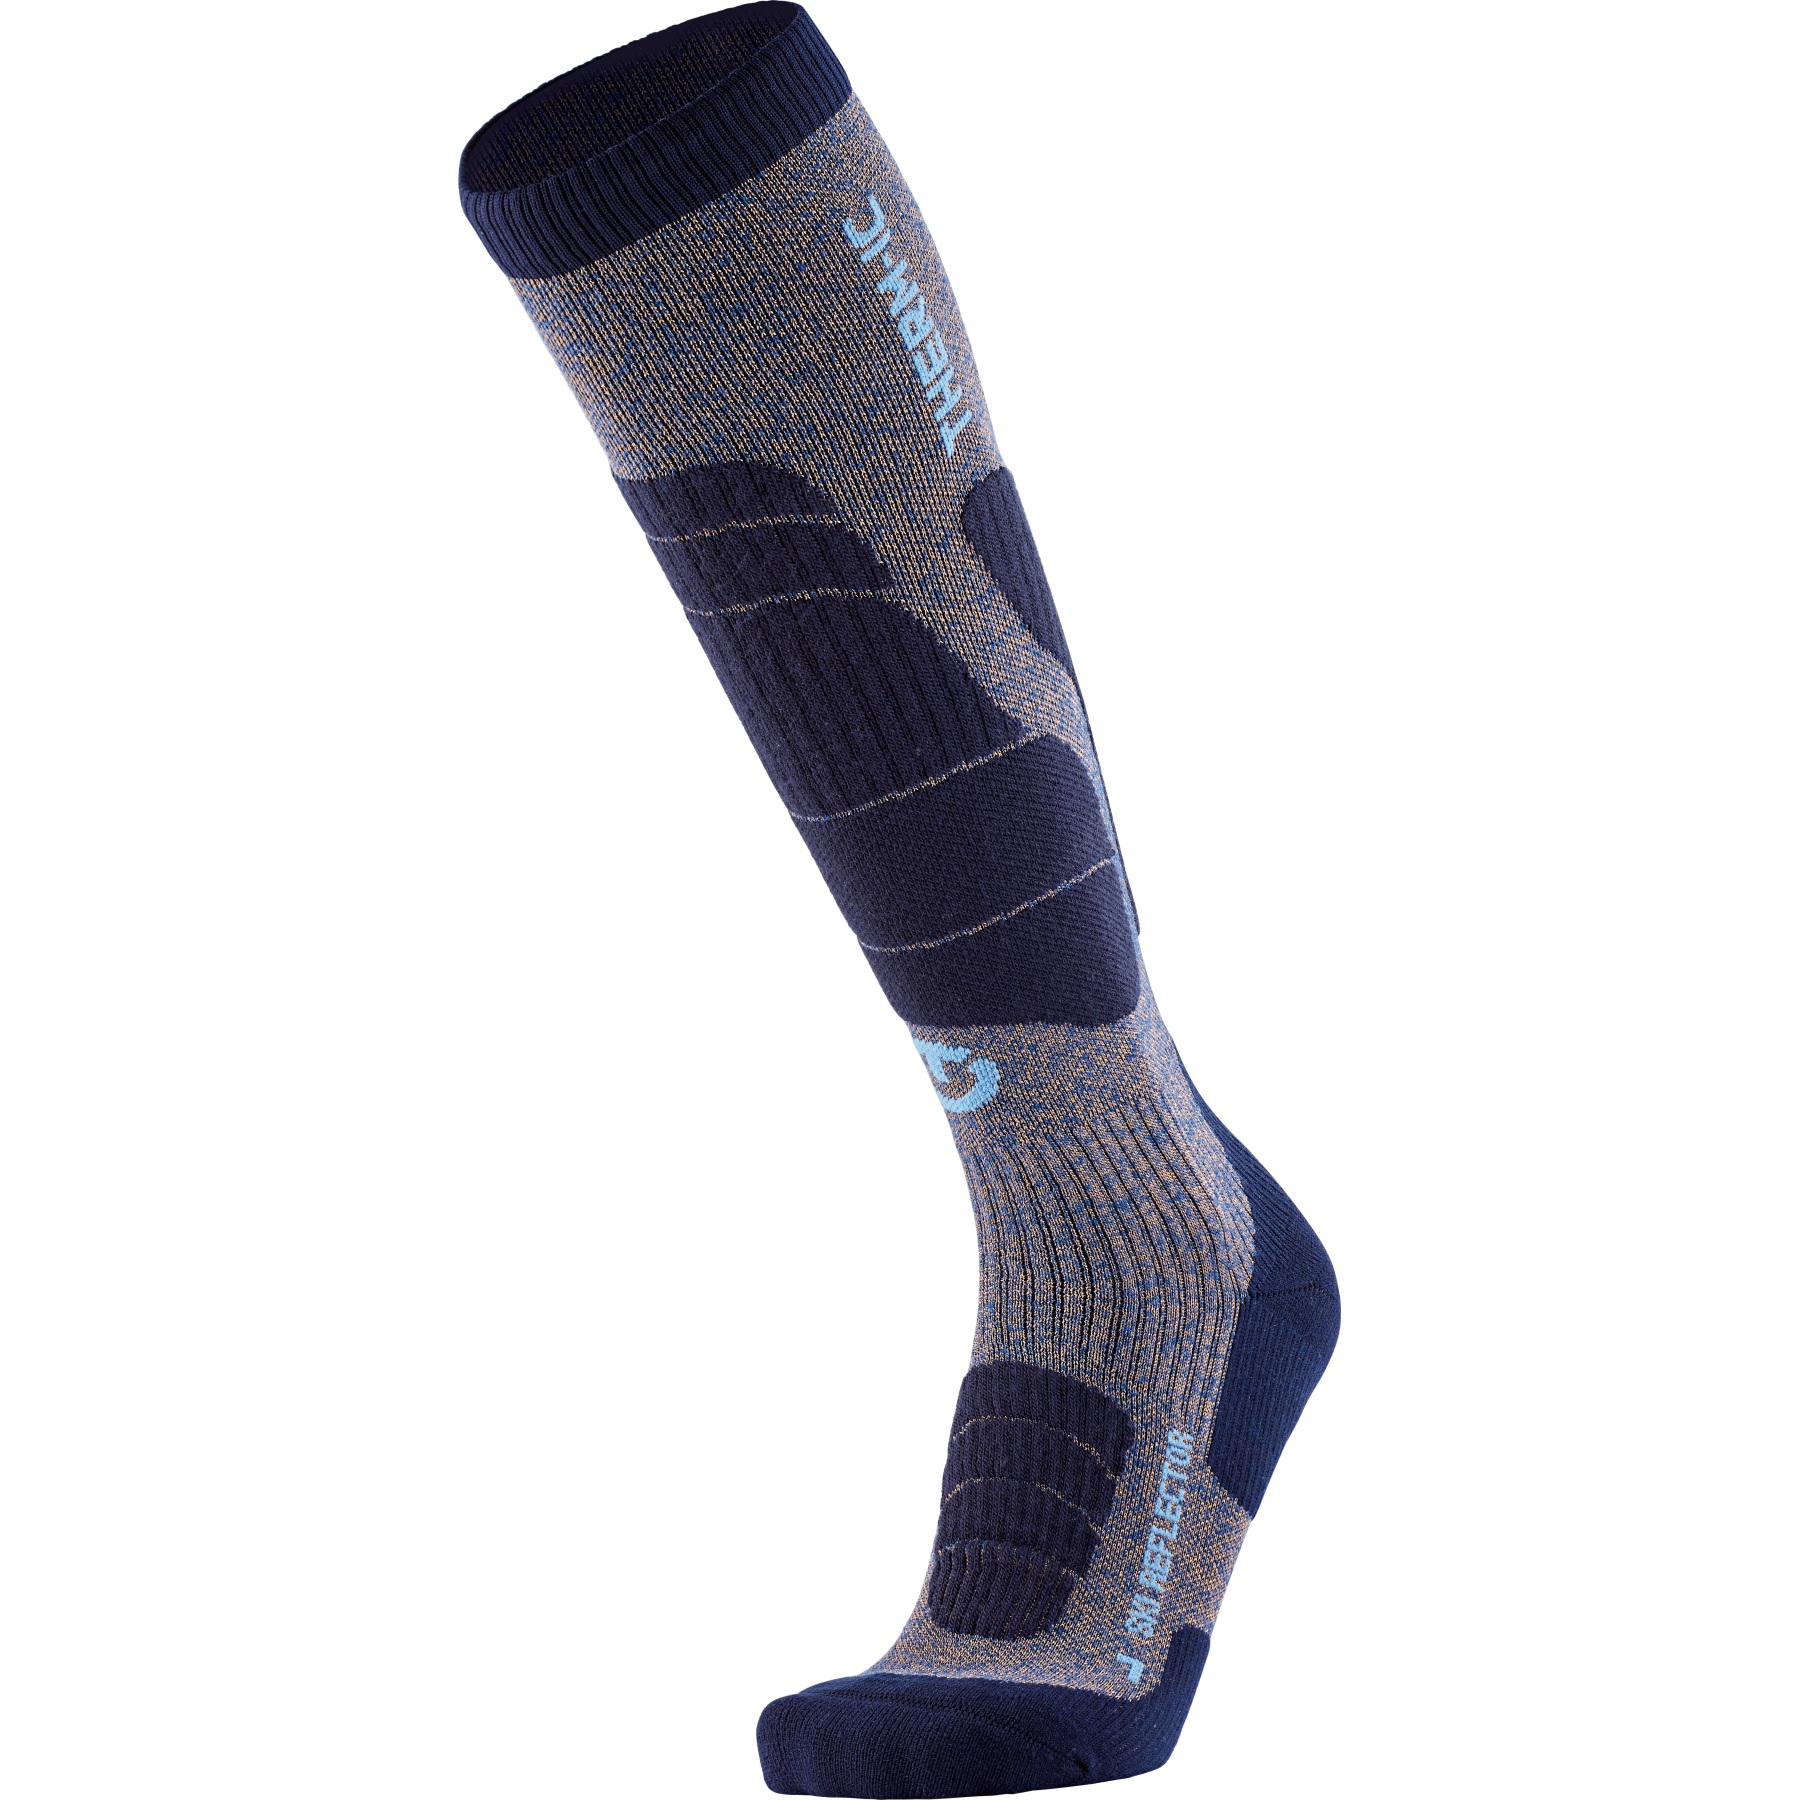 Productfoto van therm-ic Ski Merino Reflector Men Socks - Blue/Gold